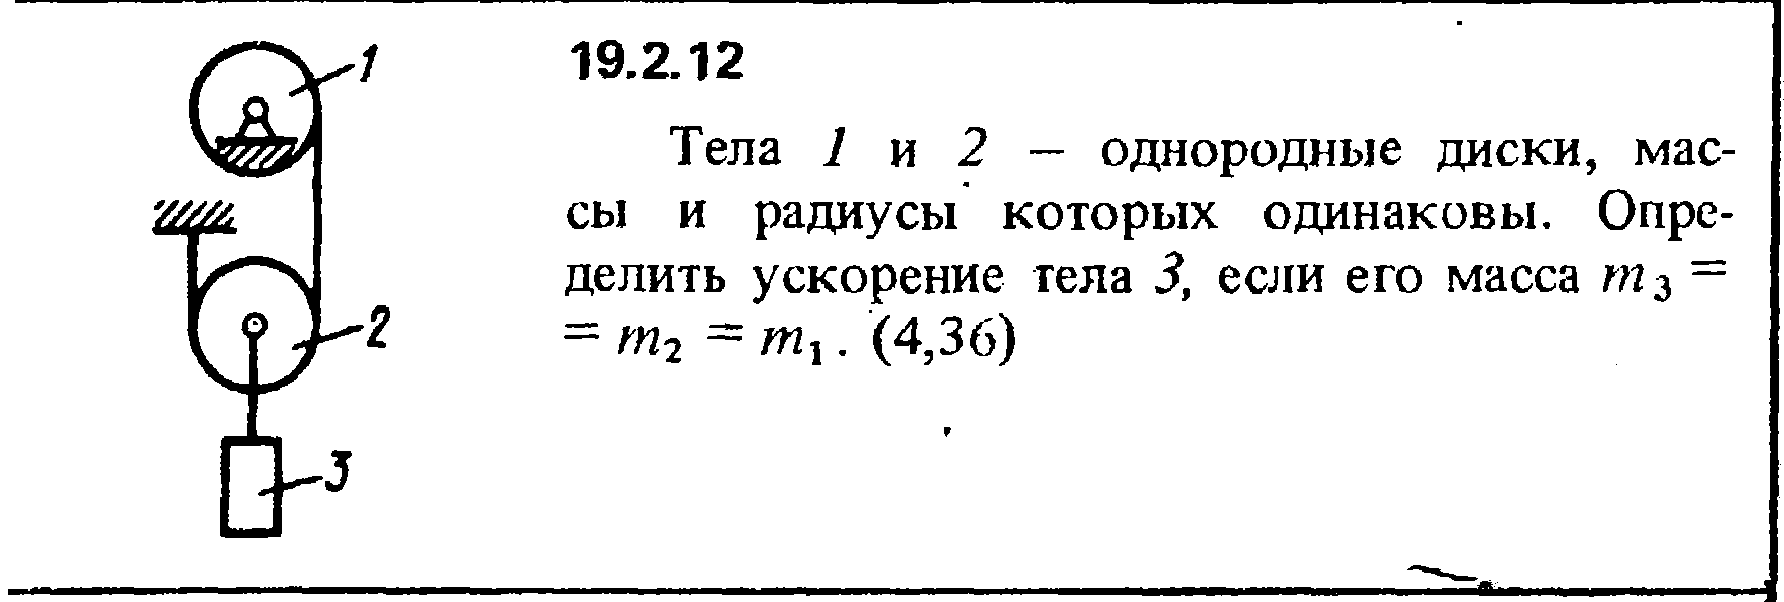 Решение 19.2.12 из сборника (решебника) Кепе О.Е. 1989